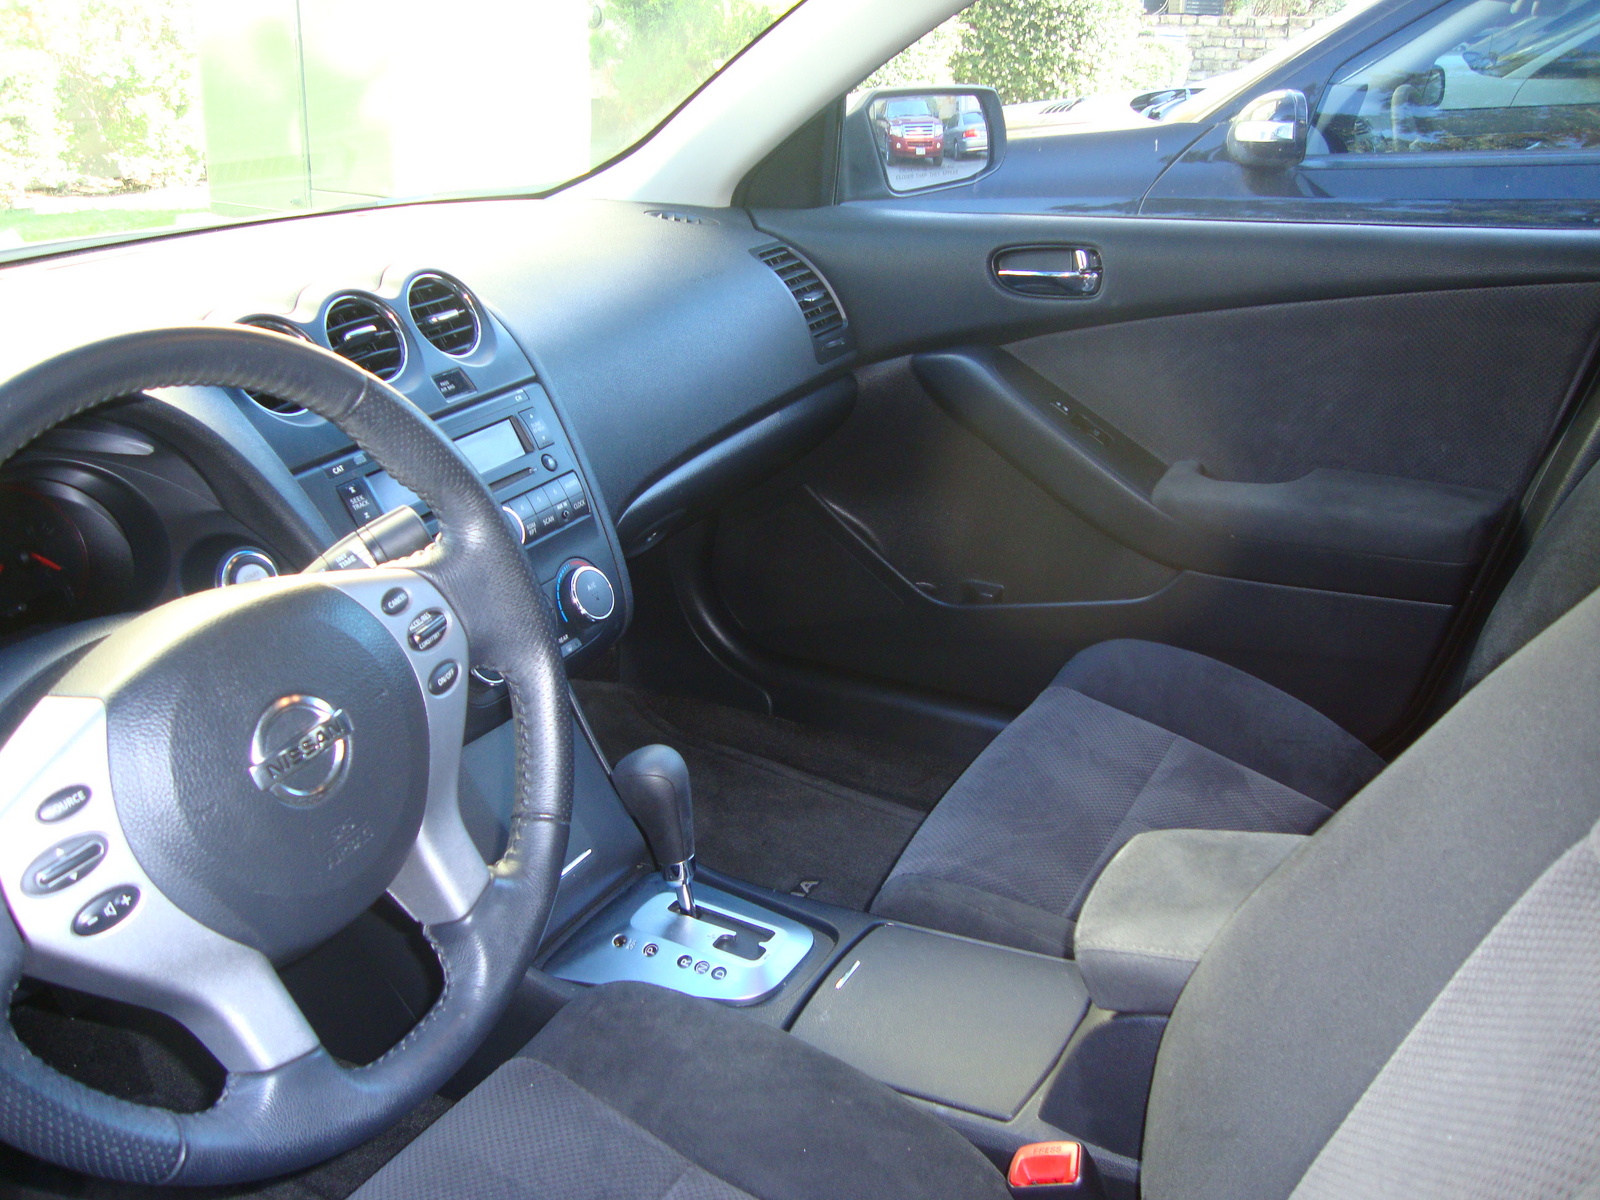 2007 Nissan altima interior specs #6